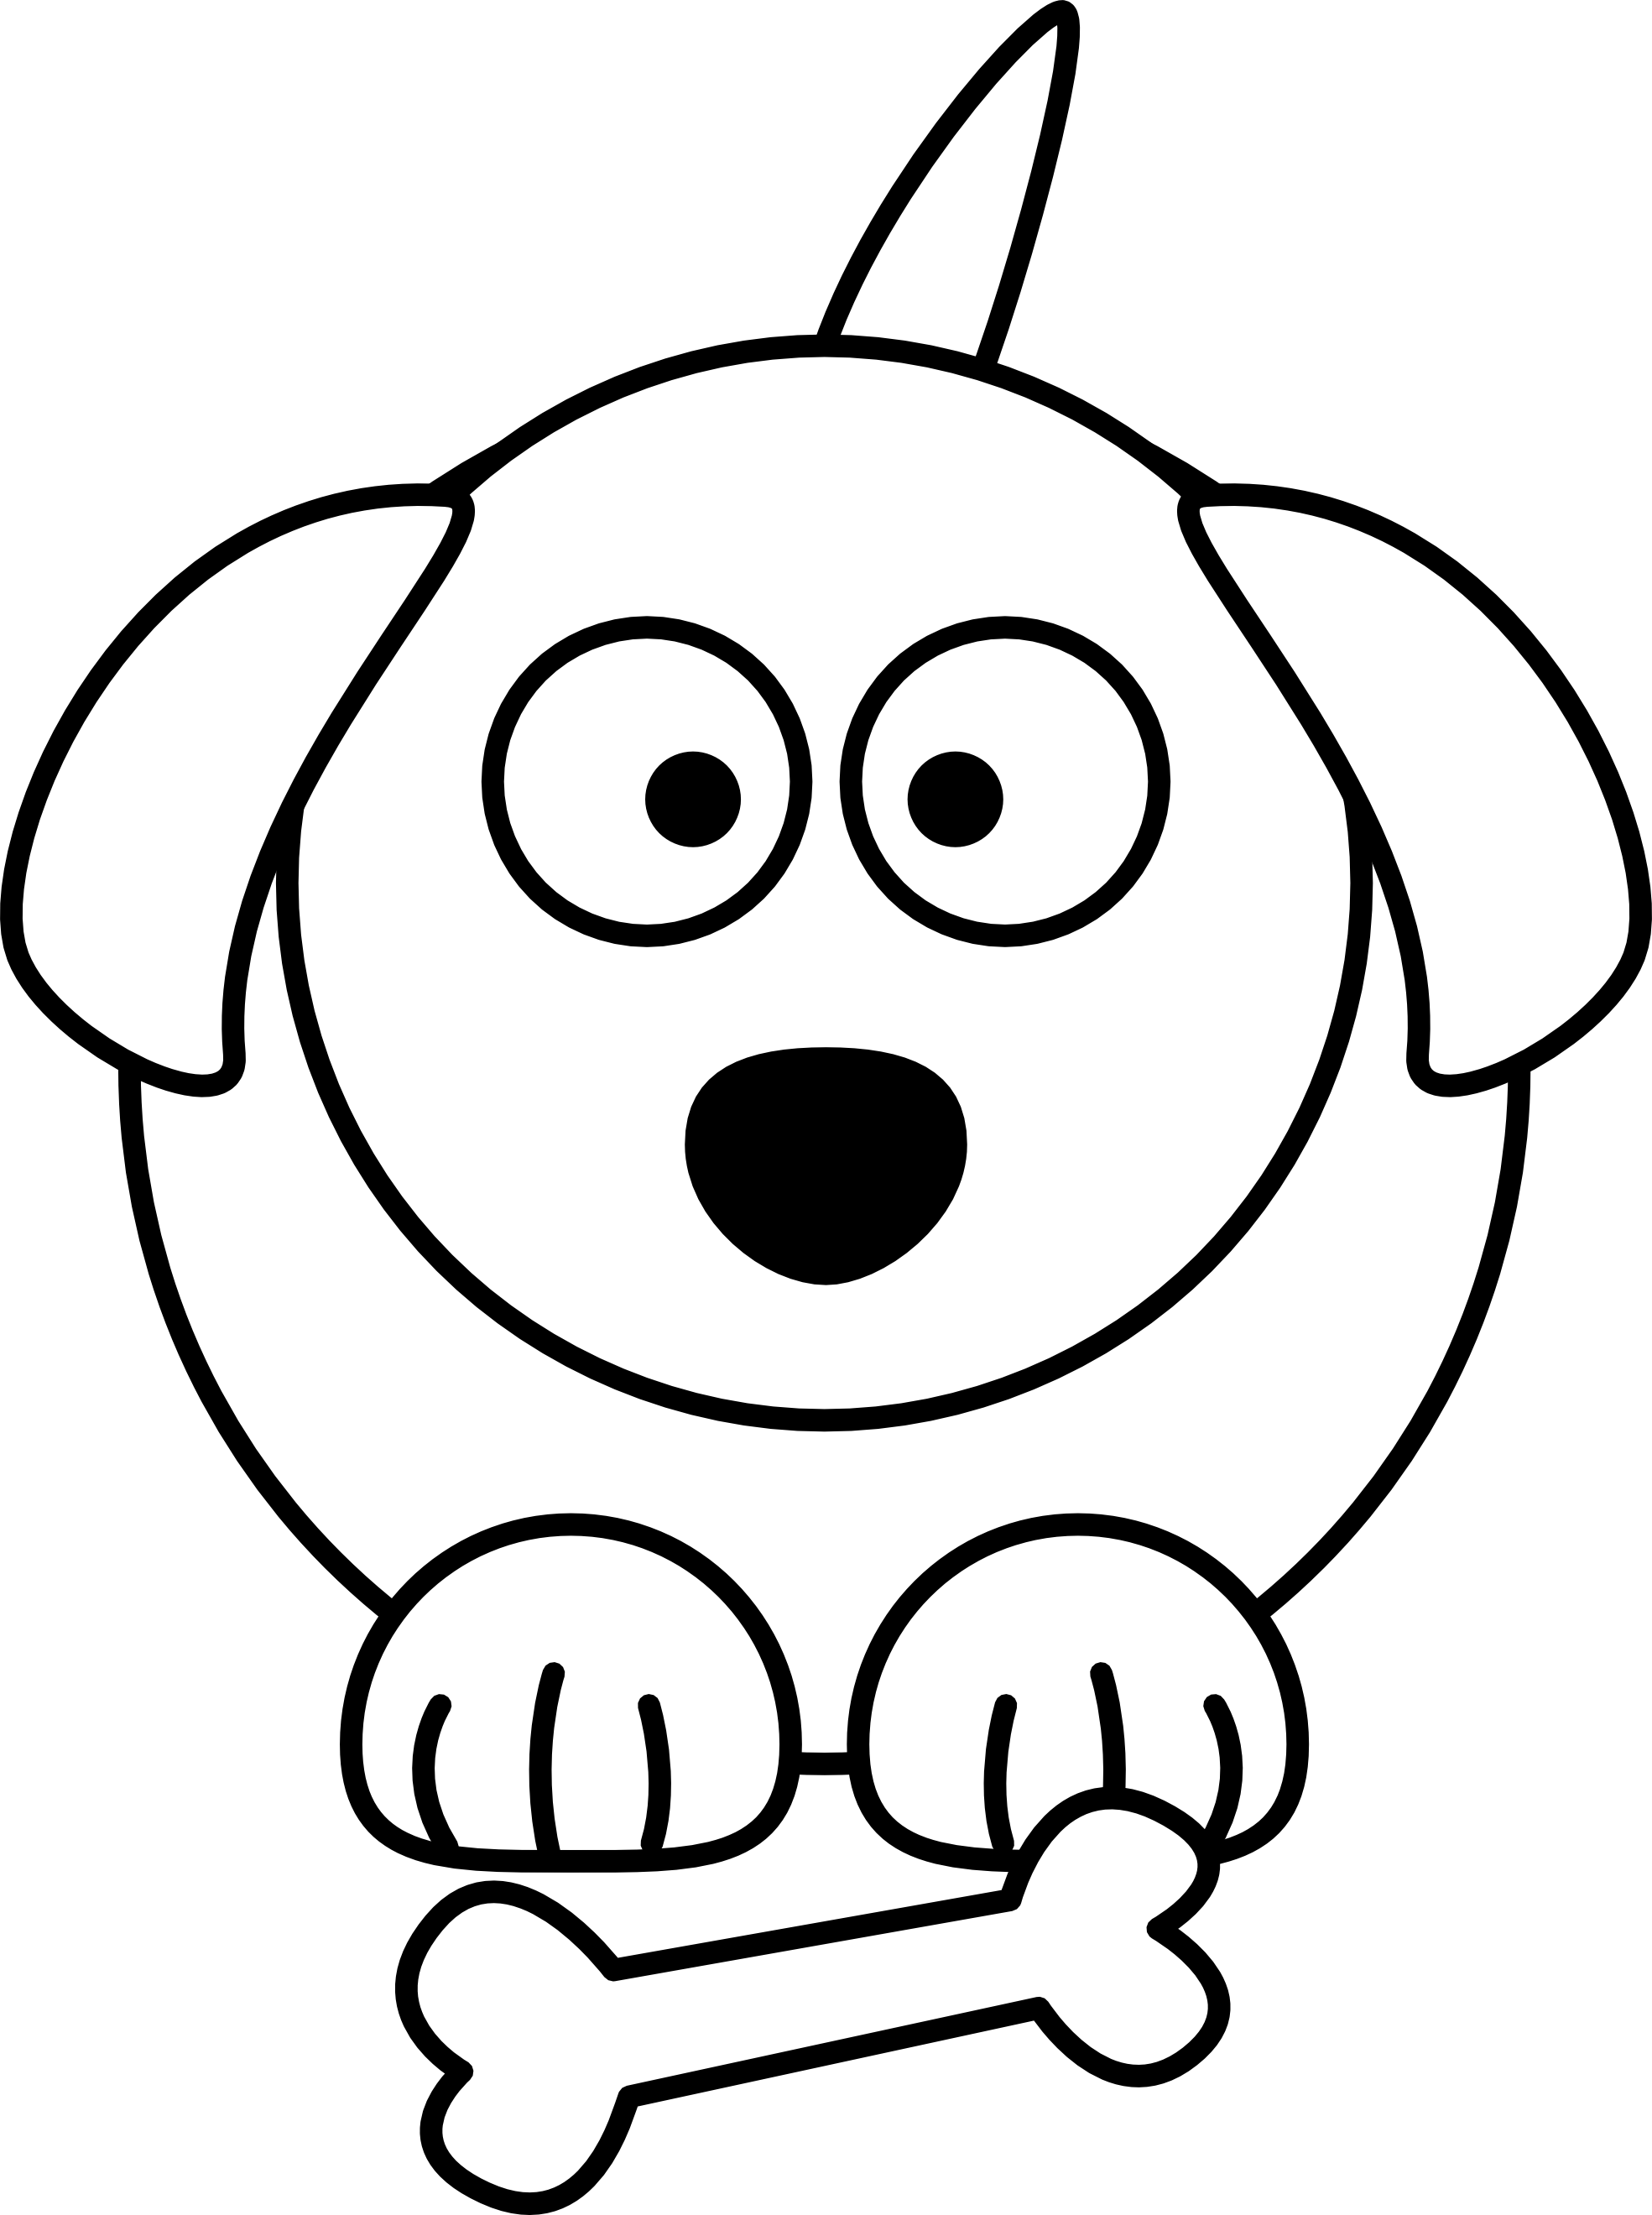 Dog Line Art | Free Download Clip Art | Free Clip Art | on Clipart ...